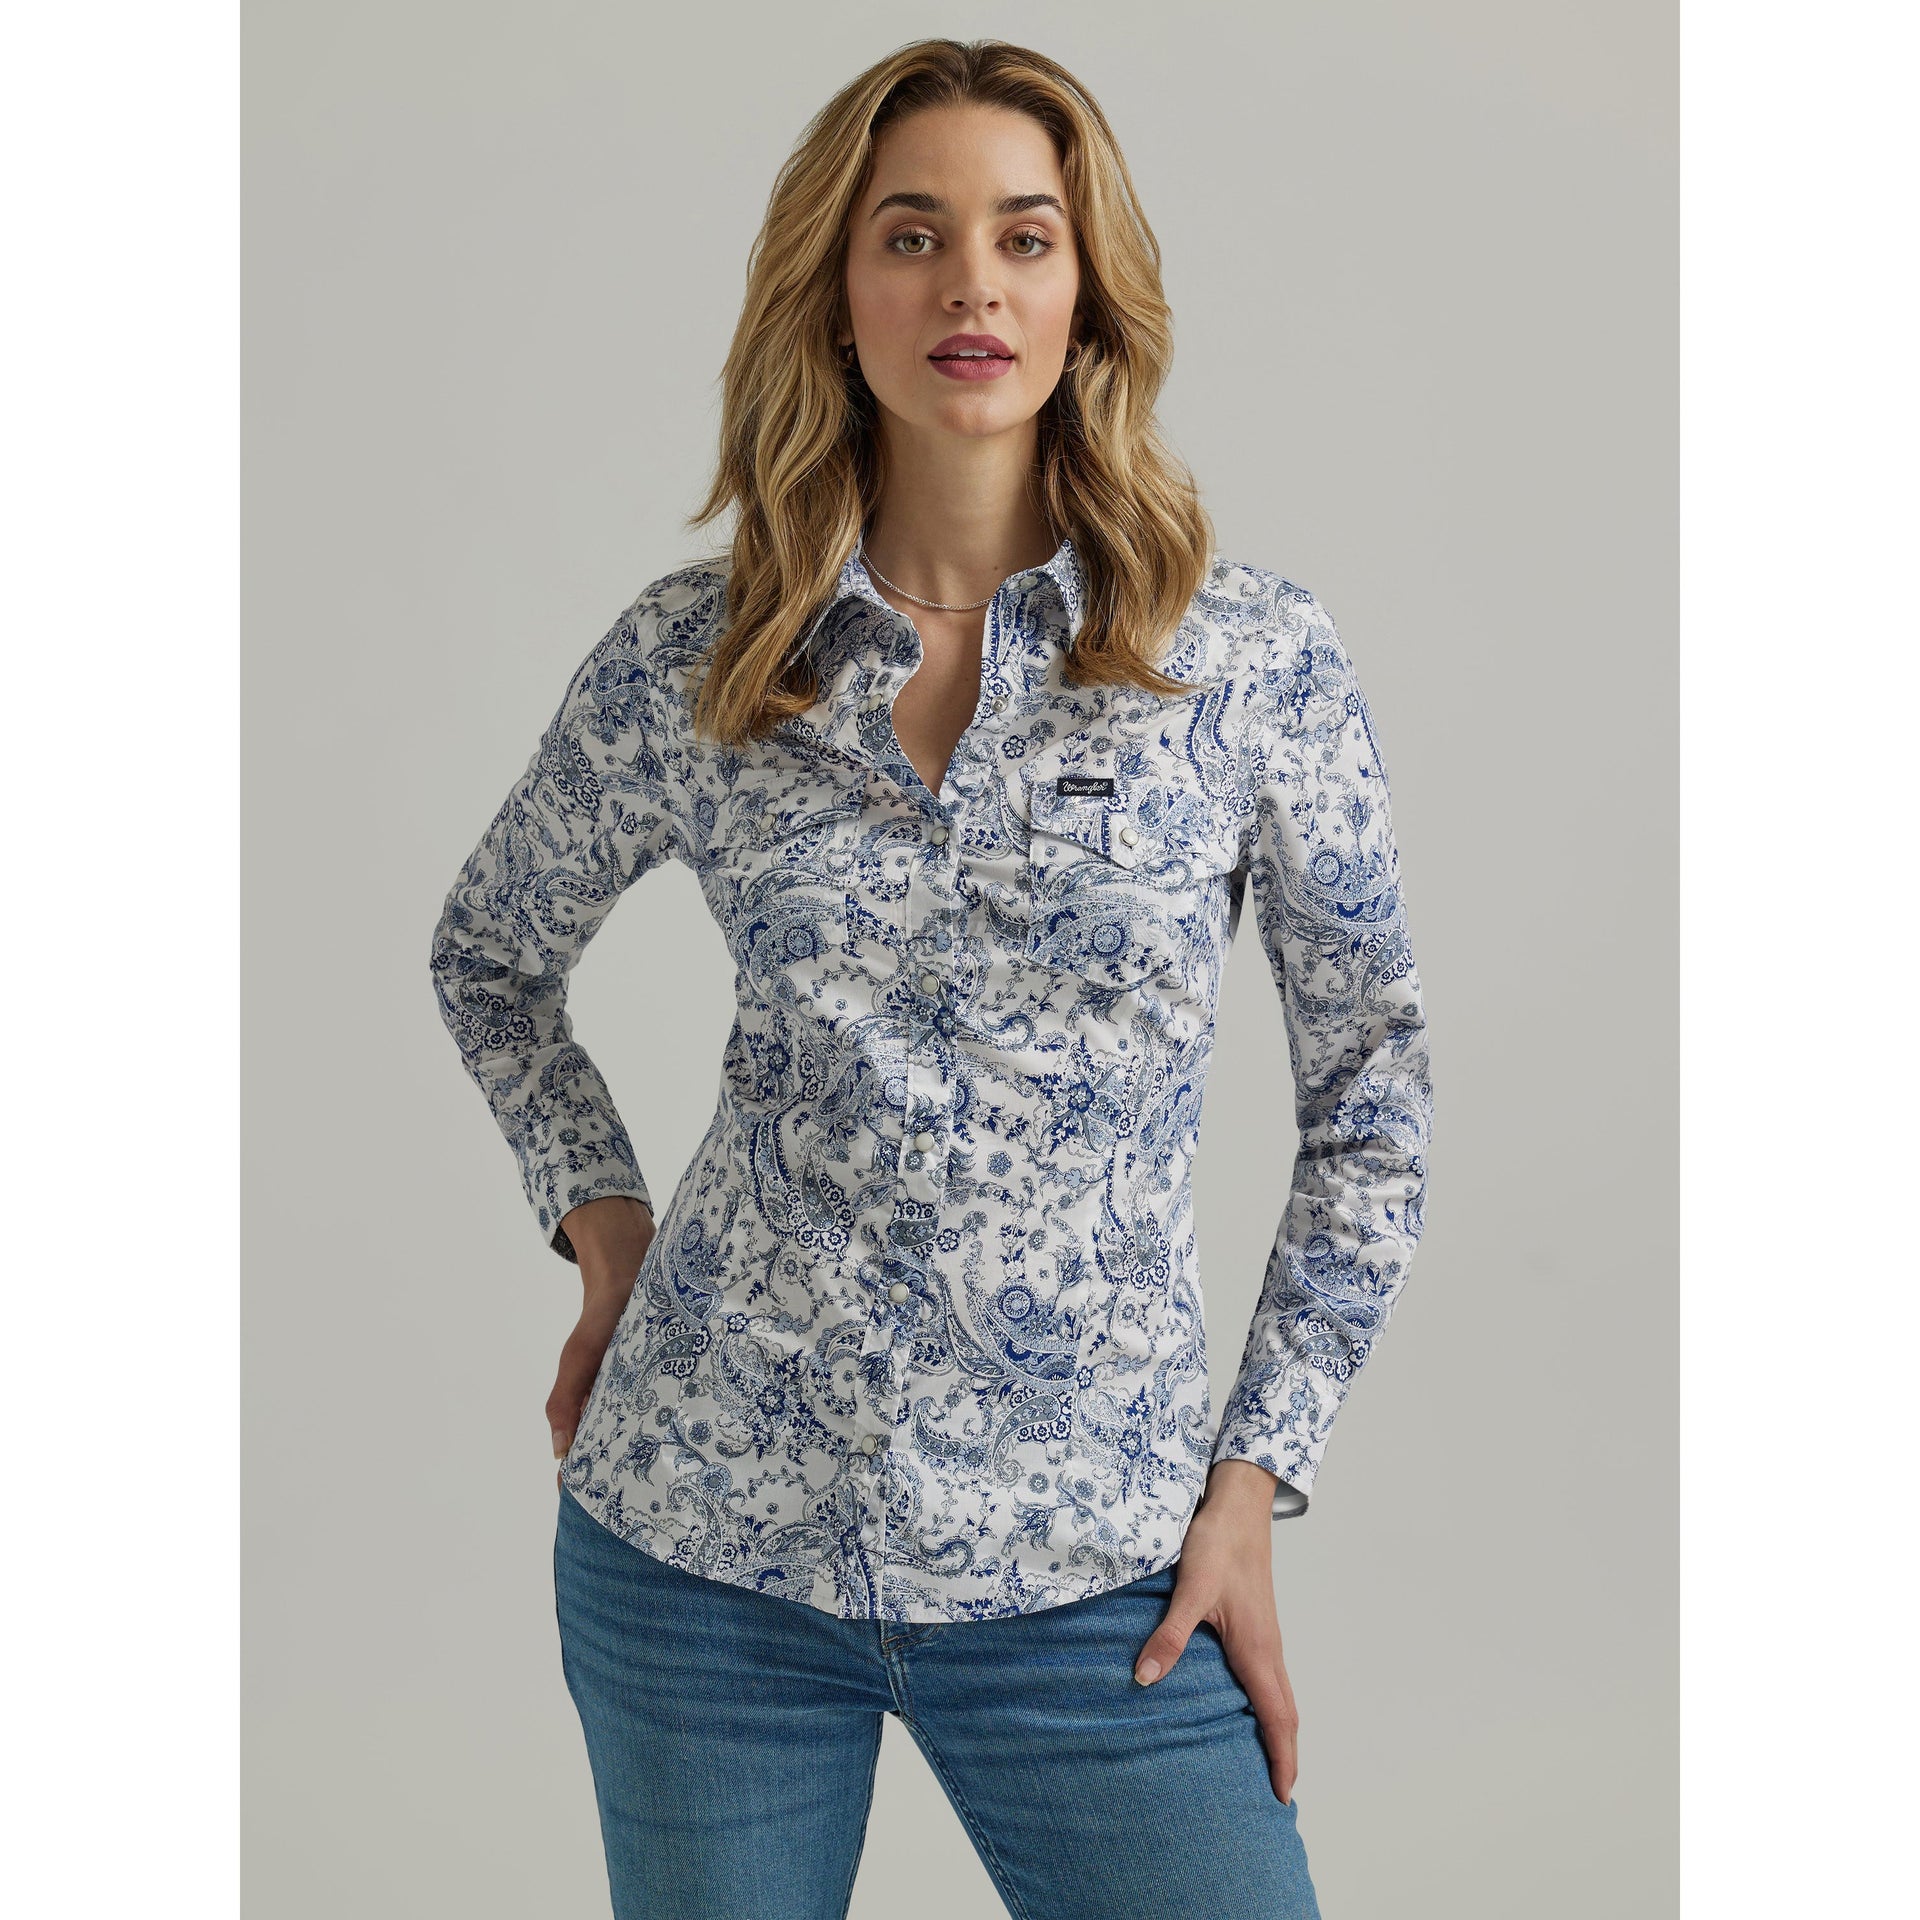 Tillie' Women's Wrangler Blue Paisley Pearl Snap Shirt (XS-XXL)